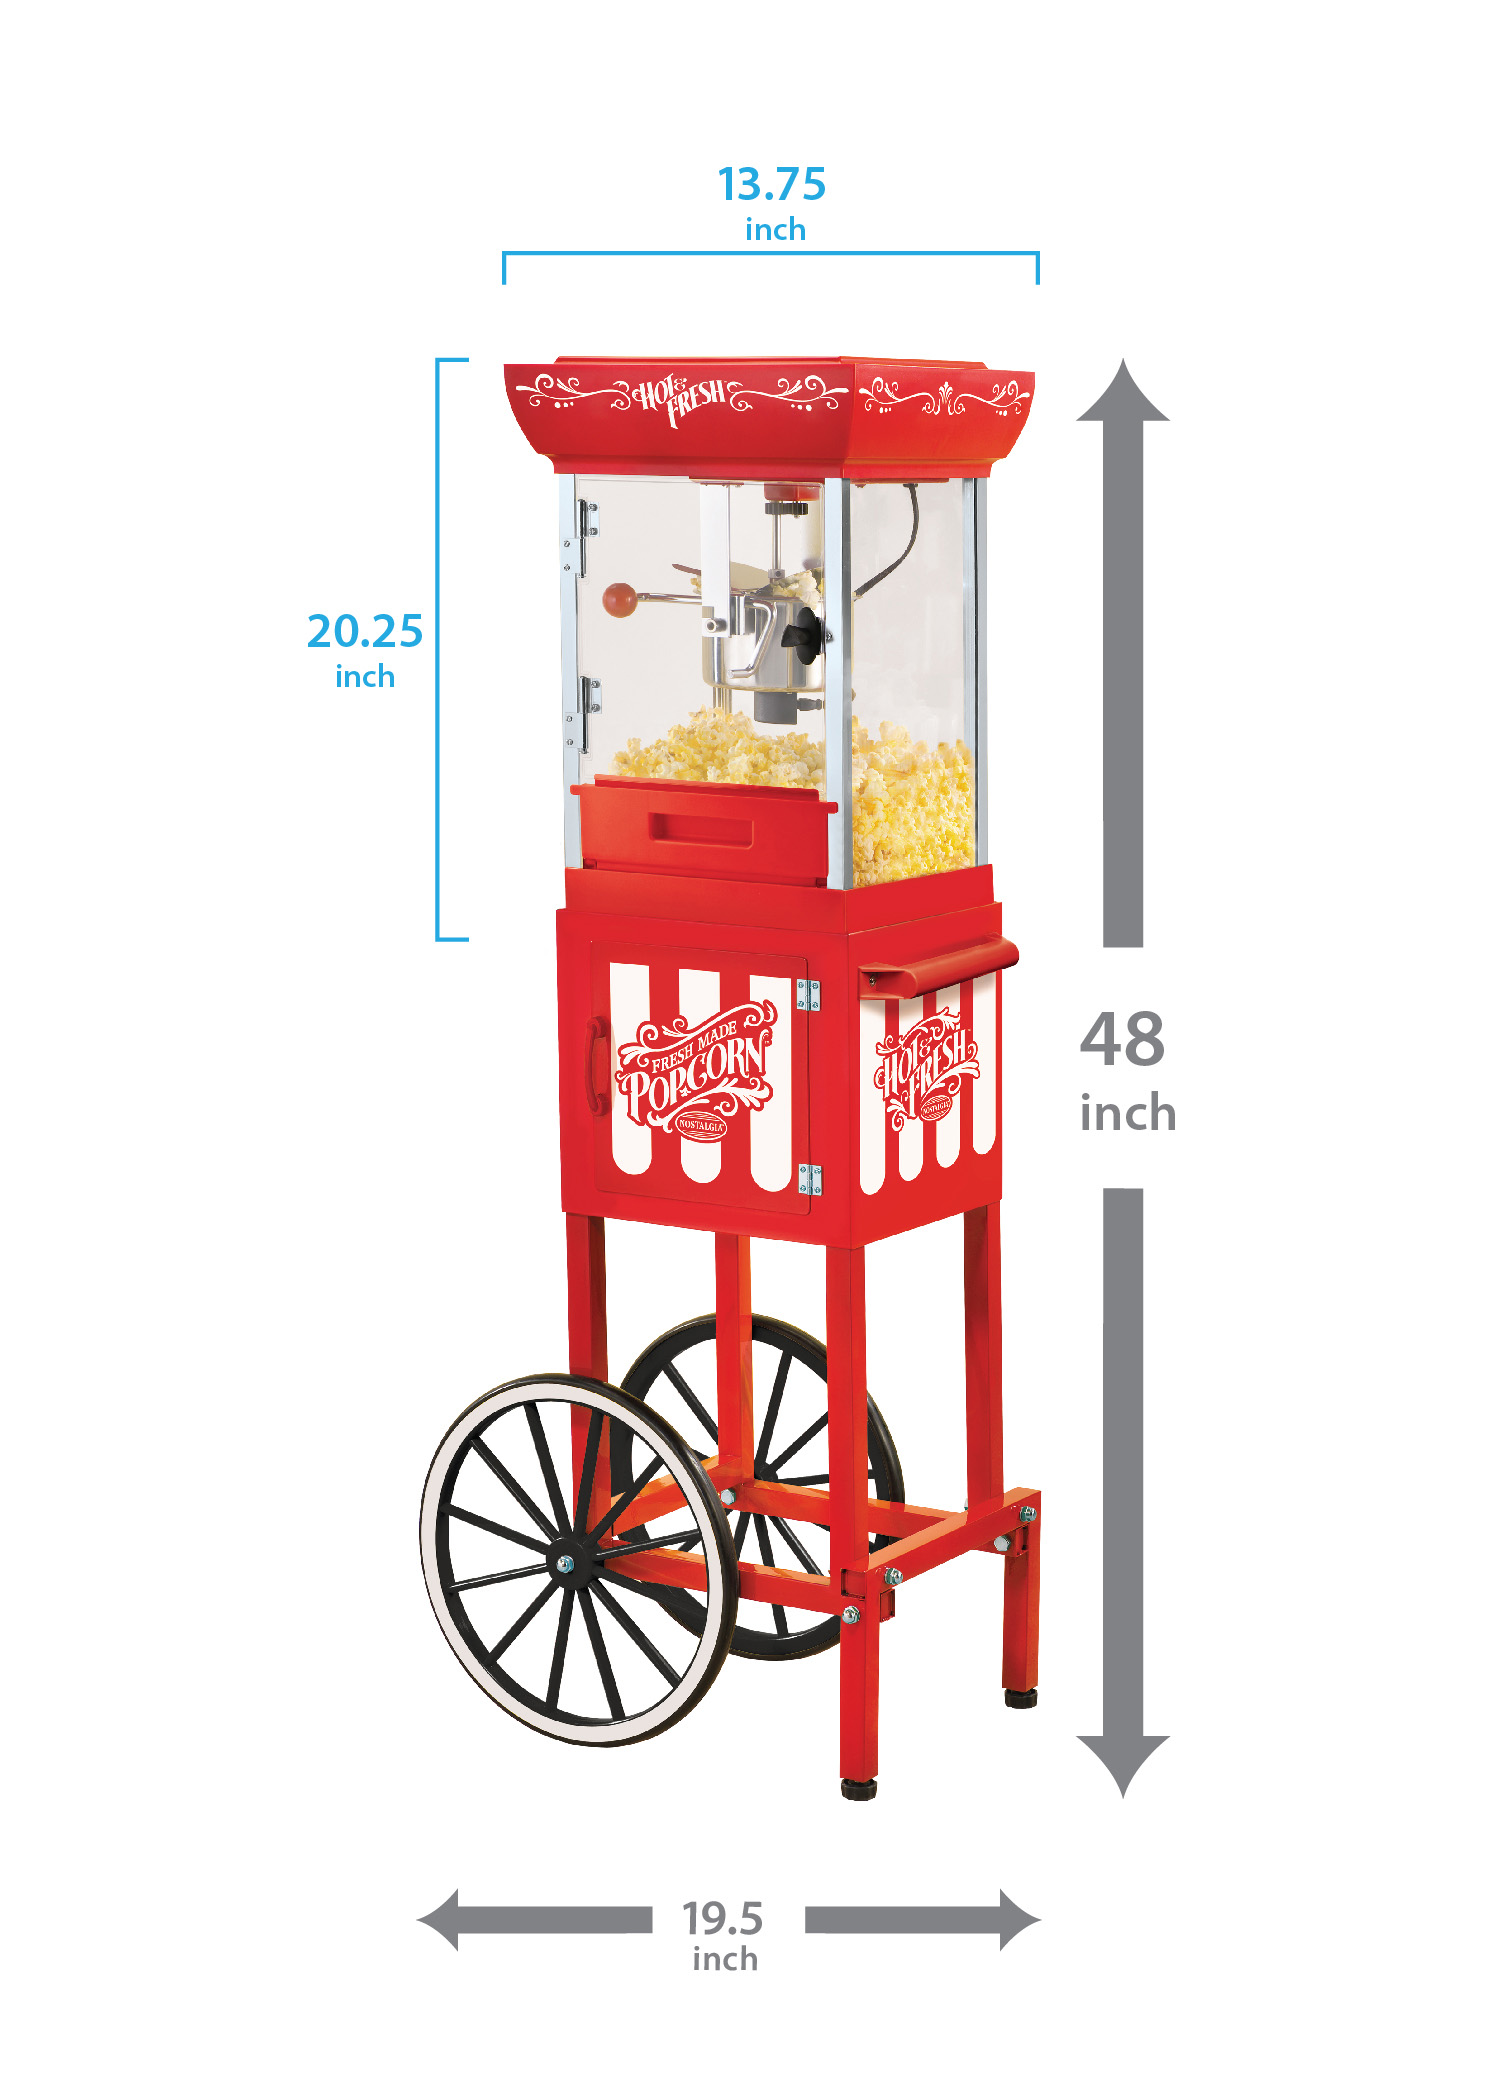 48 Inches Tall Nostalgia CCP399 2.5-Ounce Popcorn Cart 